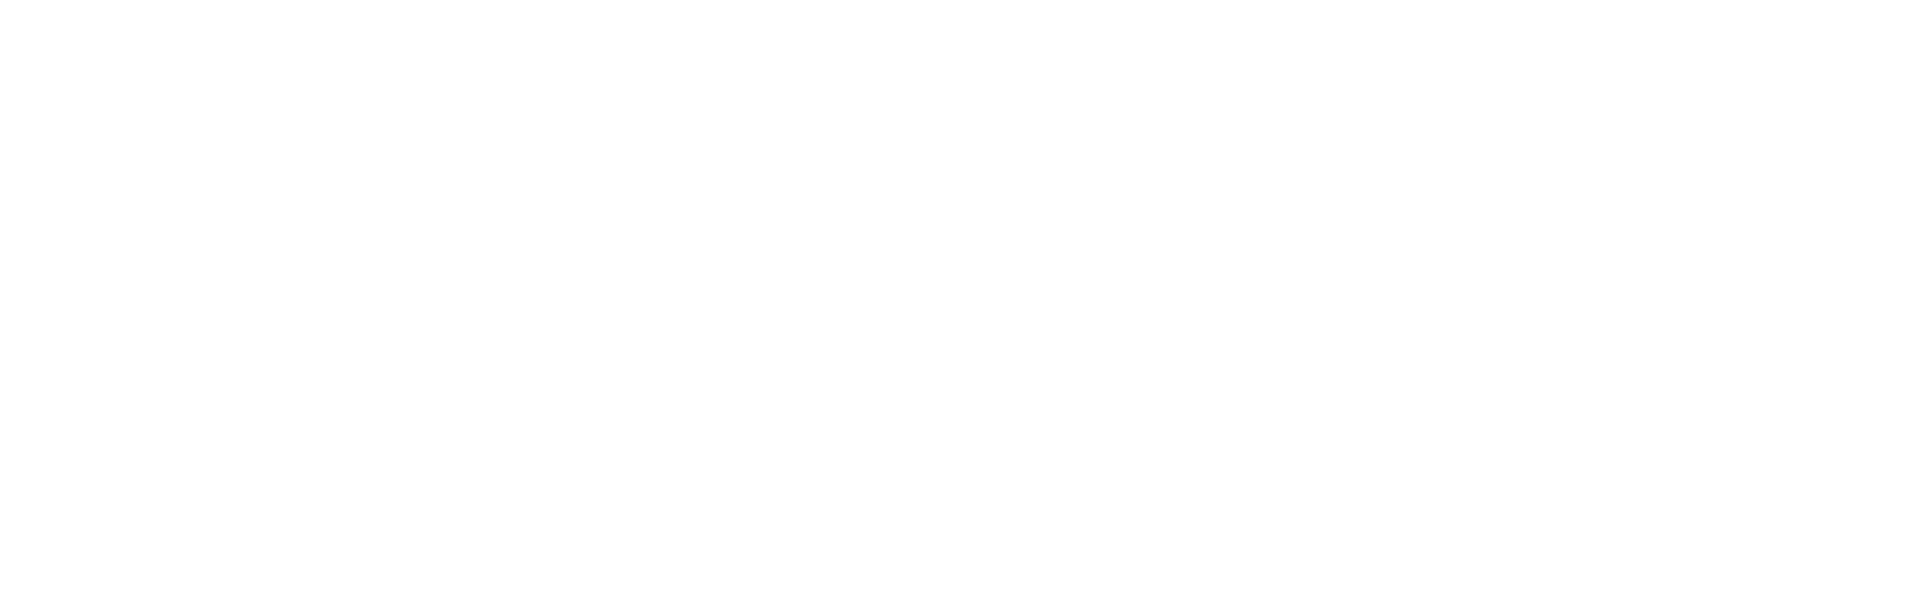 Характеристики слоев, «-Брик», форма «Слим», 1000 мл с крышкой, таблица